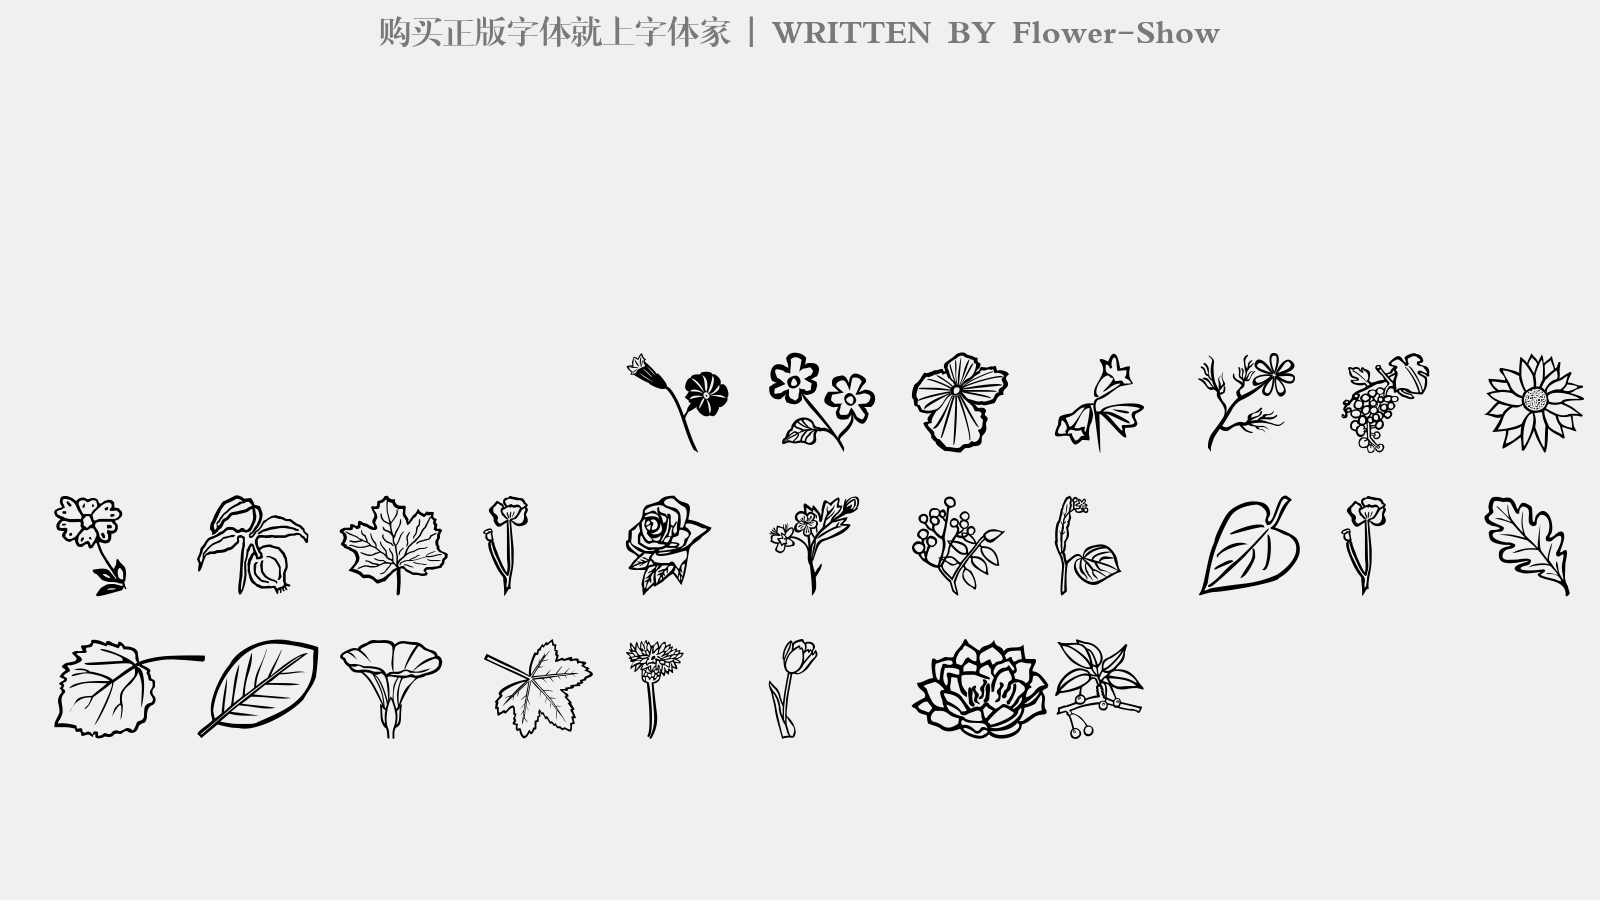 Flower-Show - 大写字母/小写字母/数字